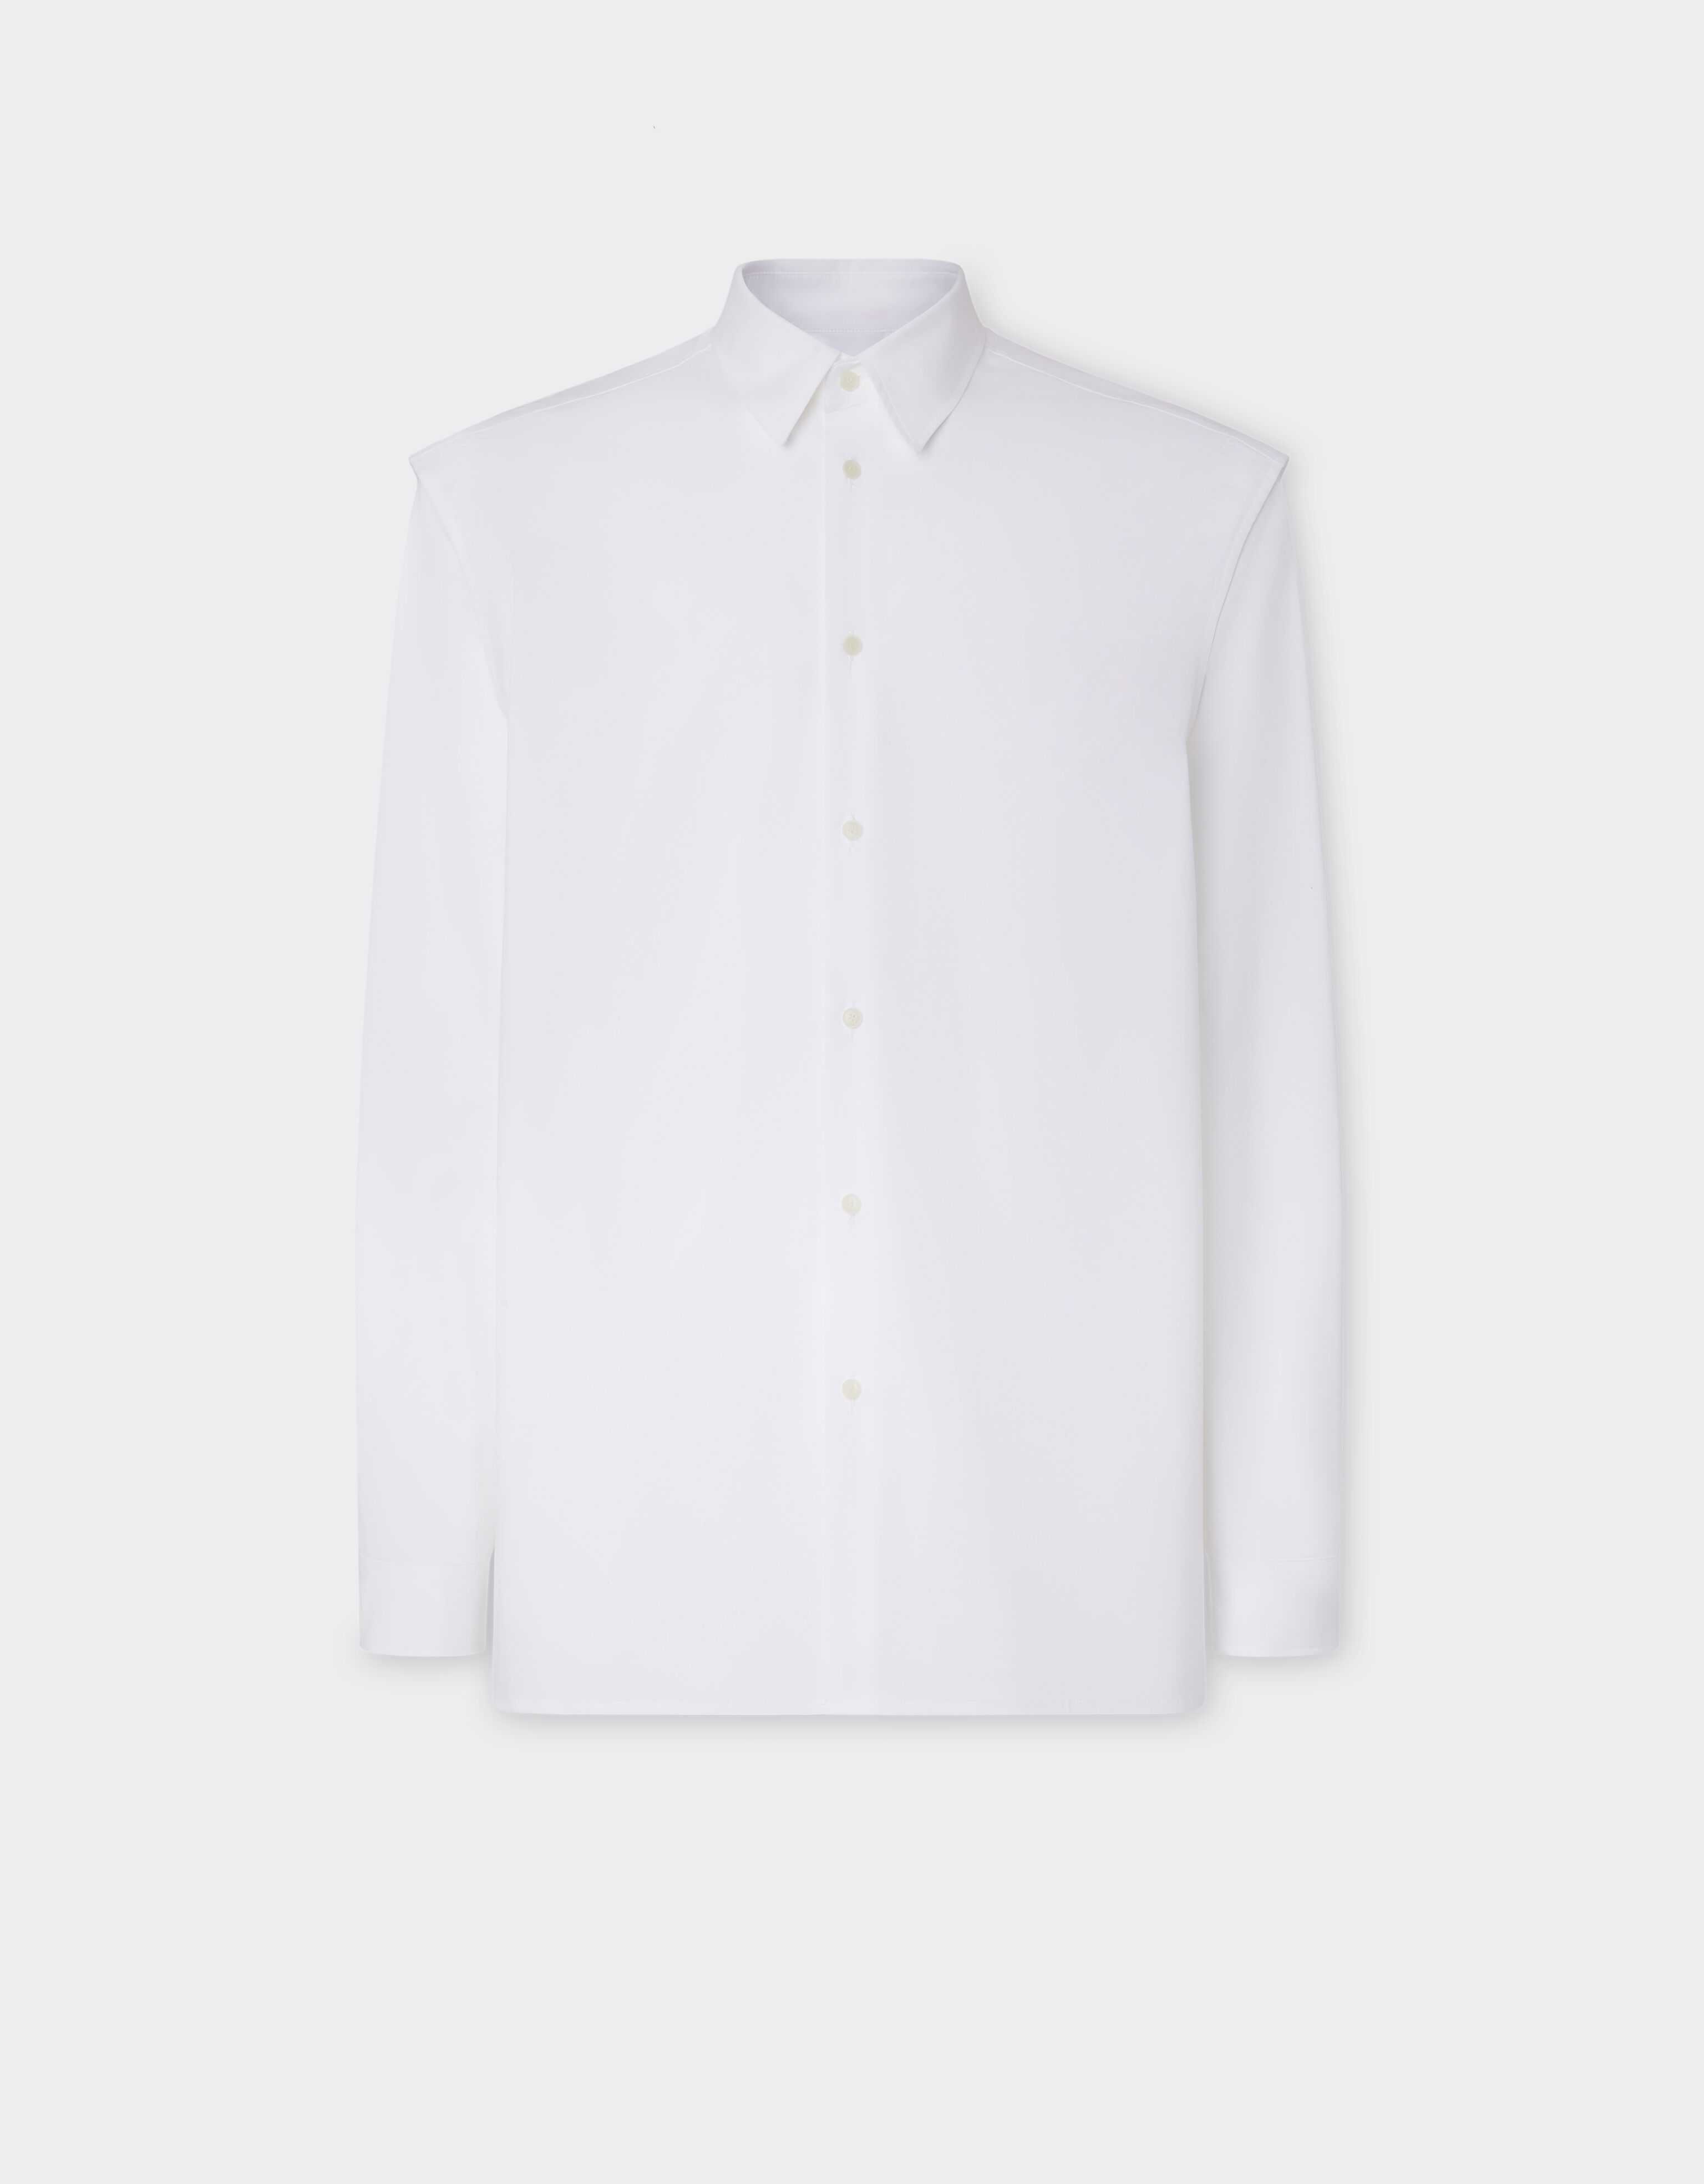 Ferrari Cotton shirt with 3D grosgrain taping Giallo Modena 48314f